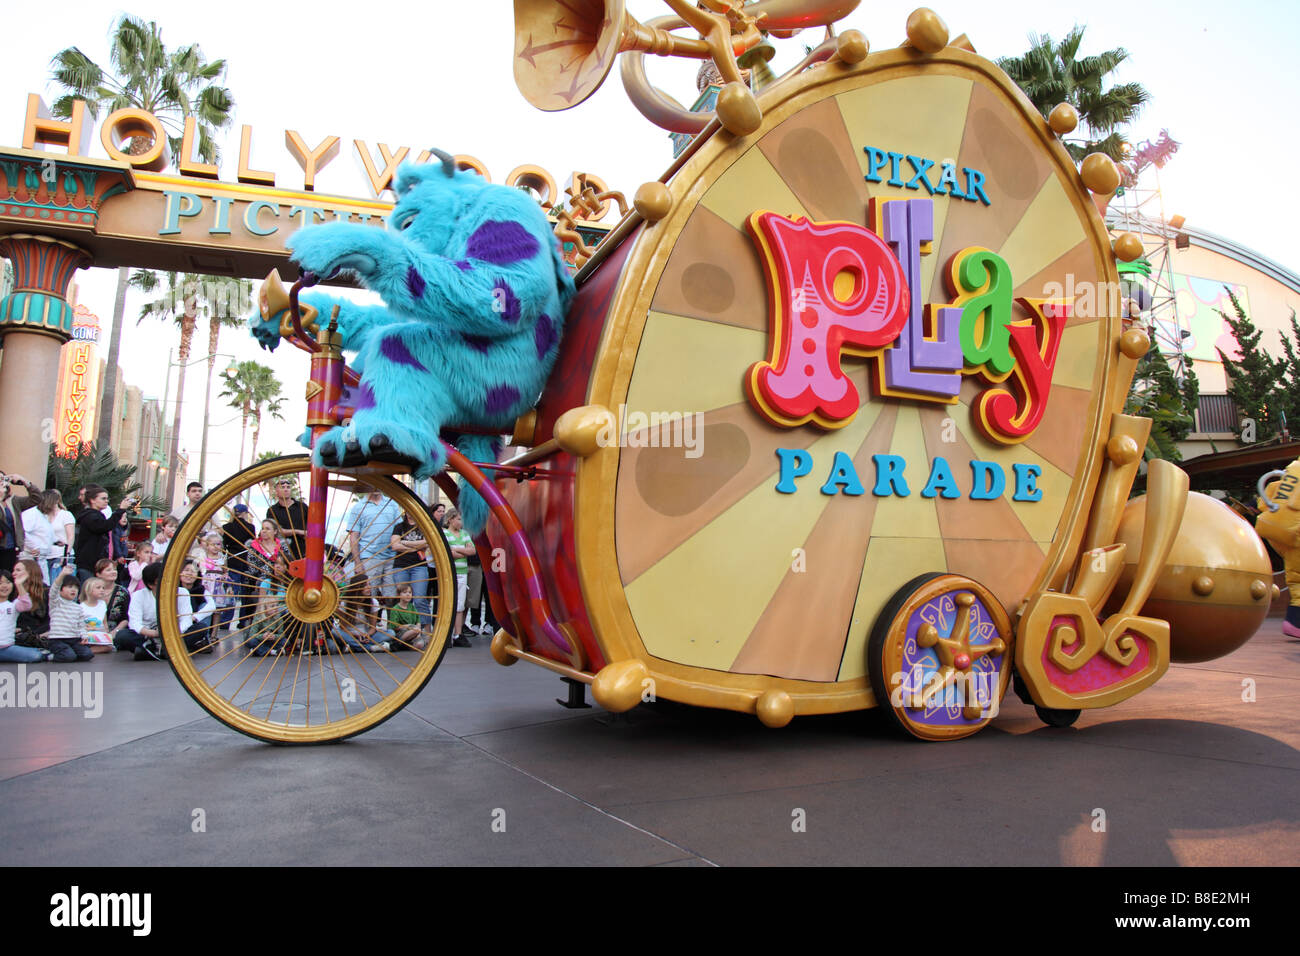 Pixar parade at California Adventure theme park Stock Photo